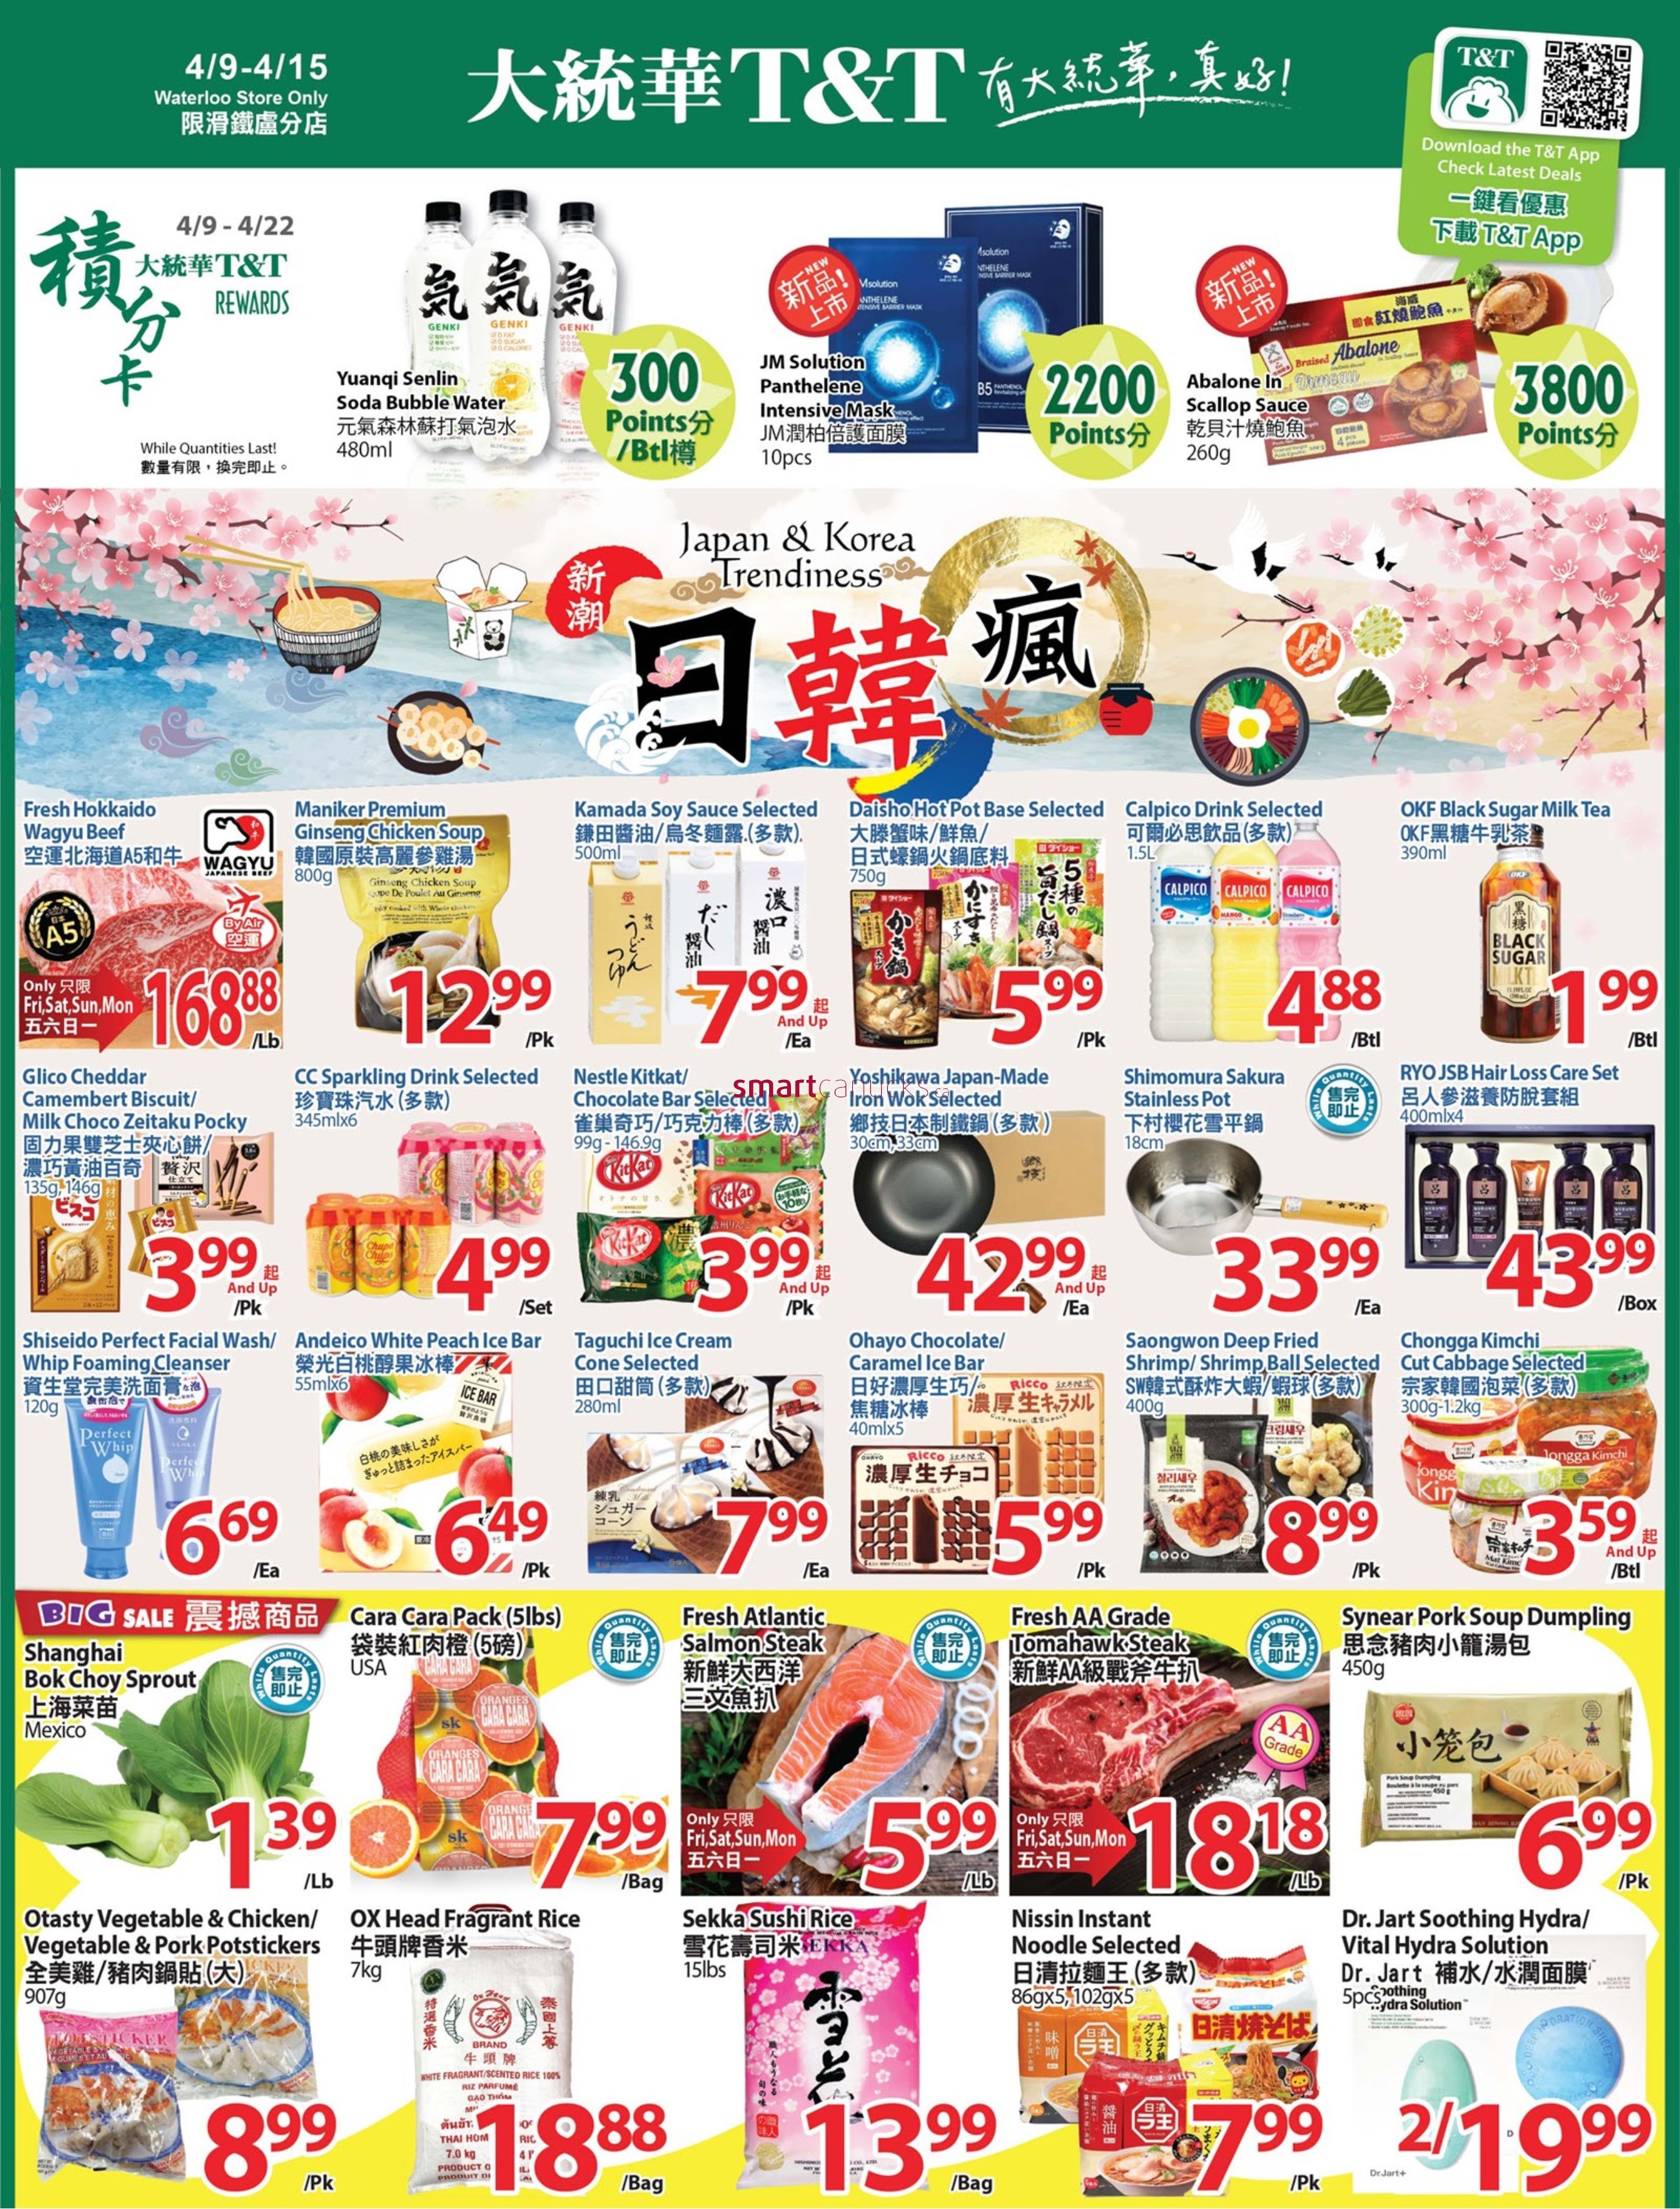 tt-supermarket-waterloo-flyer-april-9-to-15-1.jpg